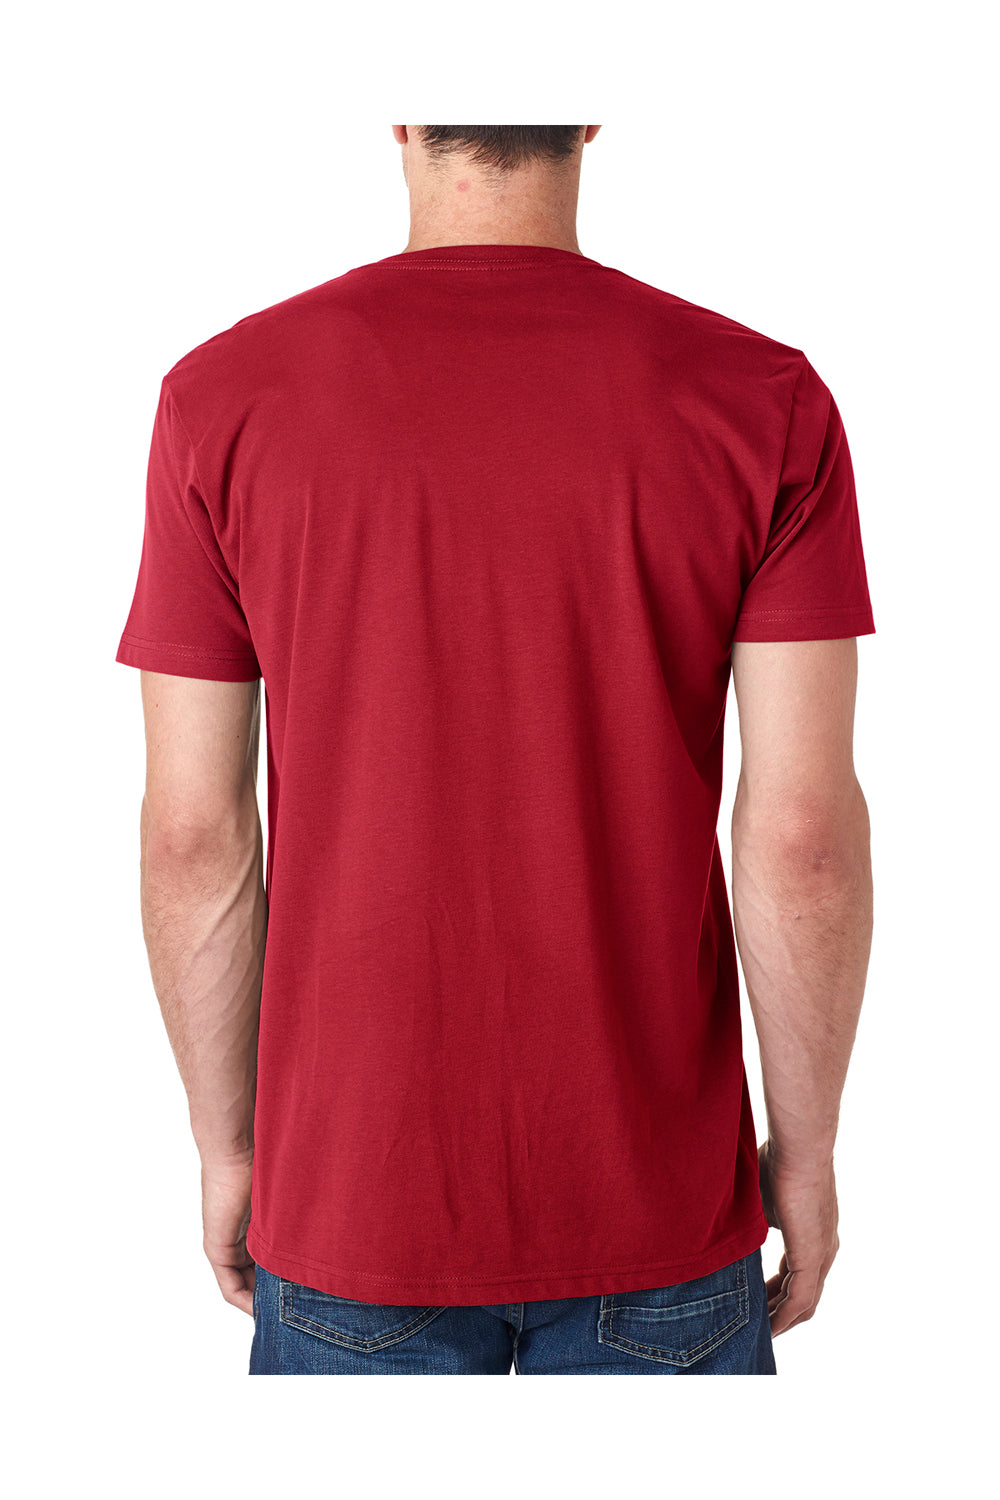 Next Level 6440 Mens Sueded Jersey Short Sleeve V-Neck T-Shirt Cardinal Red Back